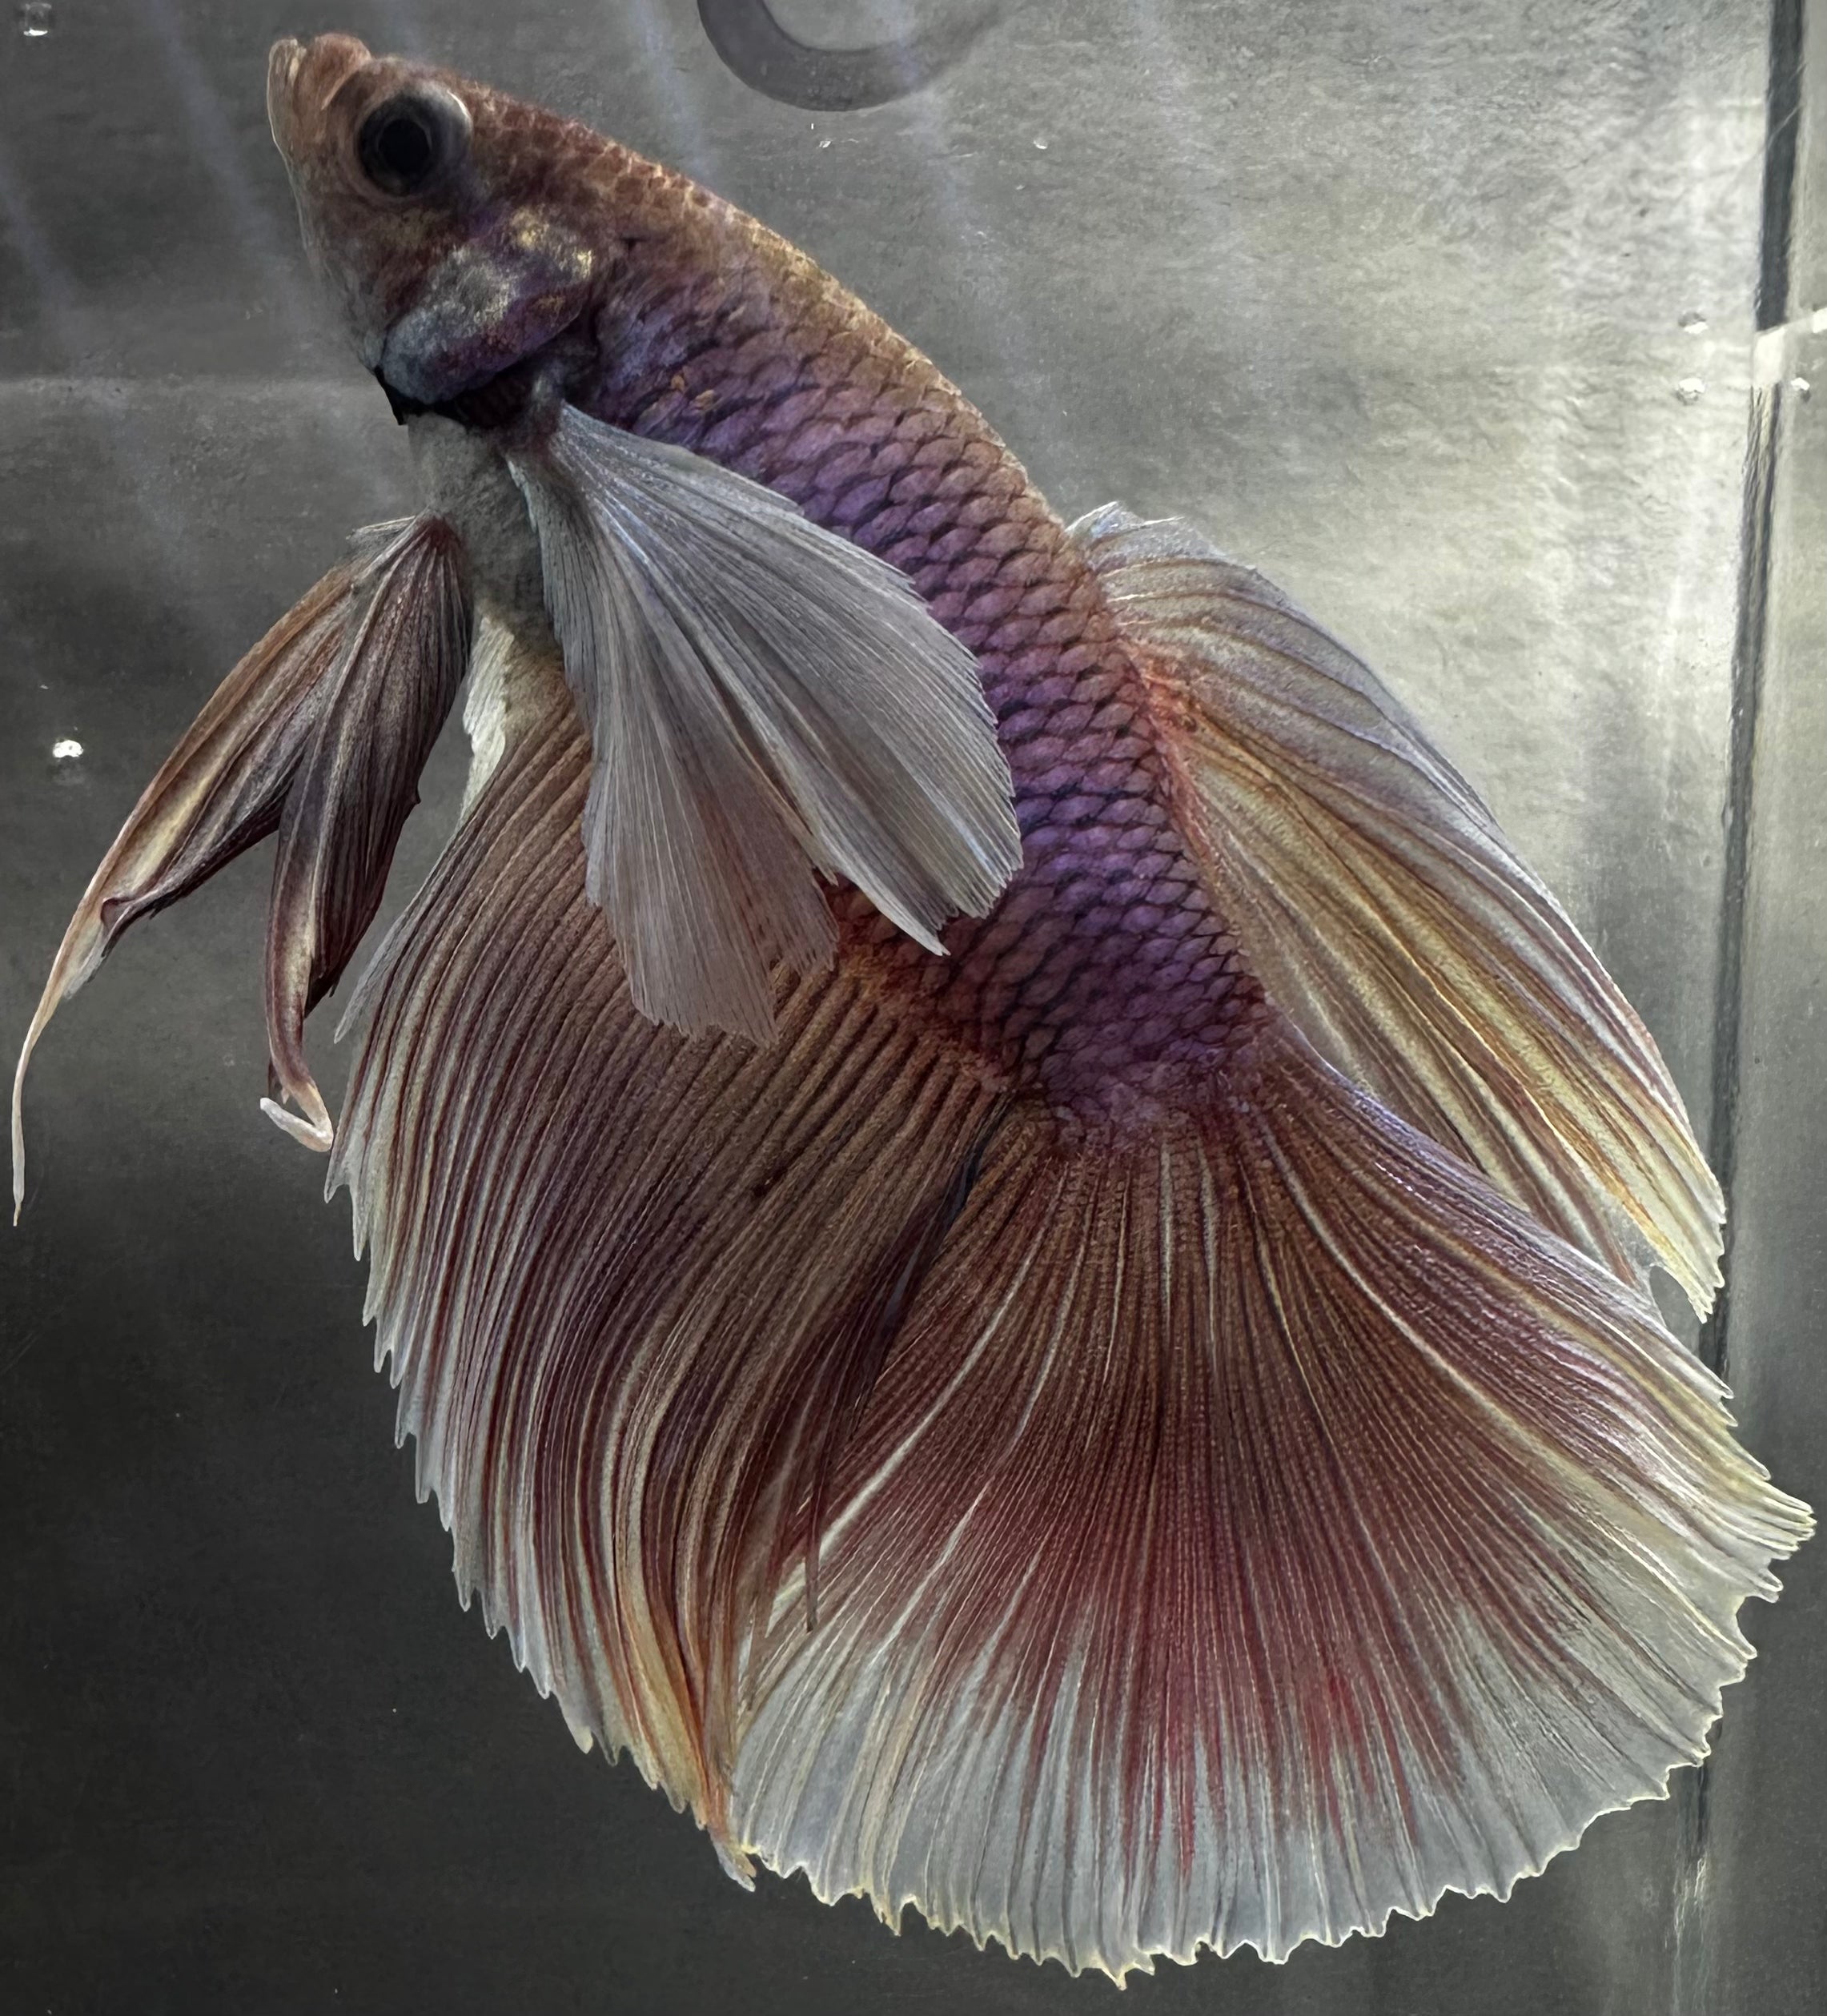 purple female betta fish